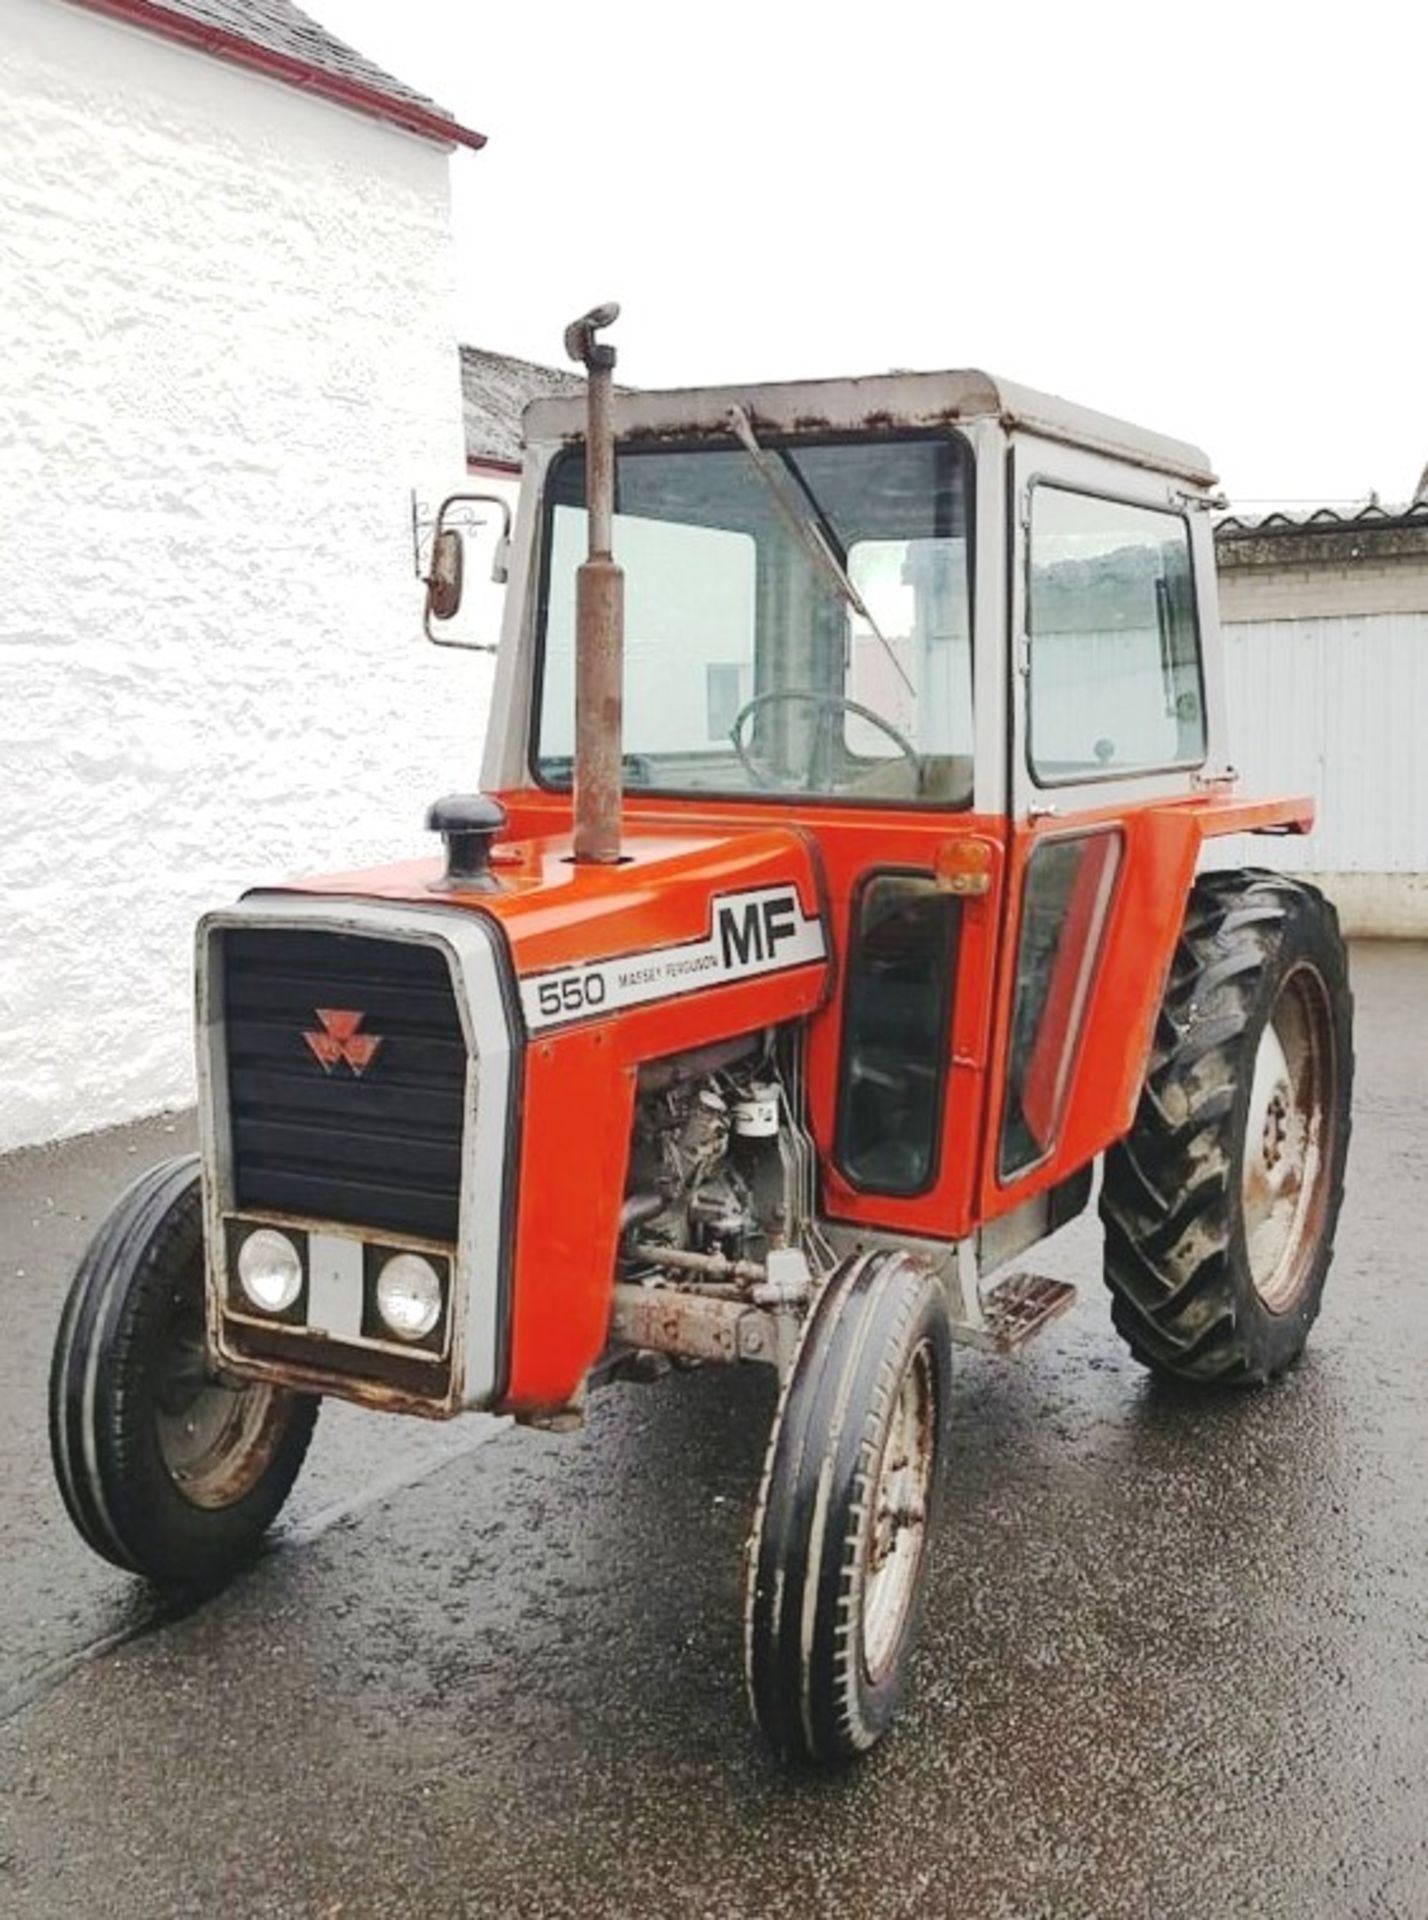 1979 MASSEY FERSUSON 550 tractor s/n 619197. Reg No OIA 804. 863hrs (not verifed)